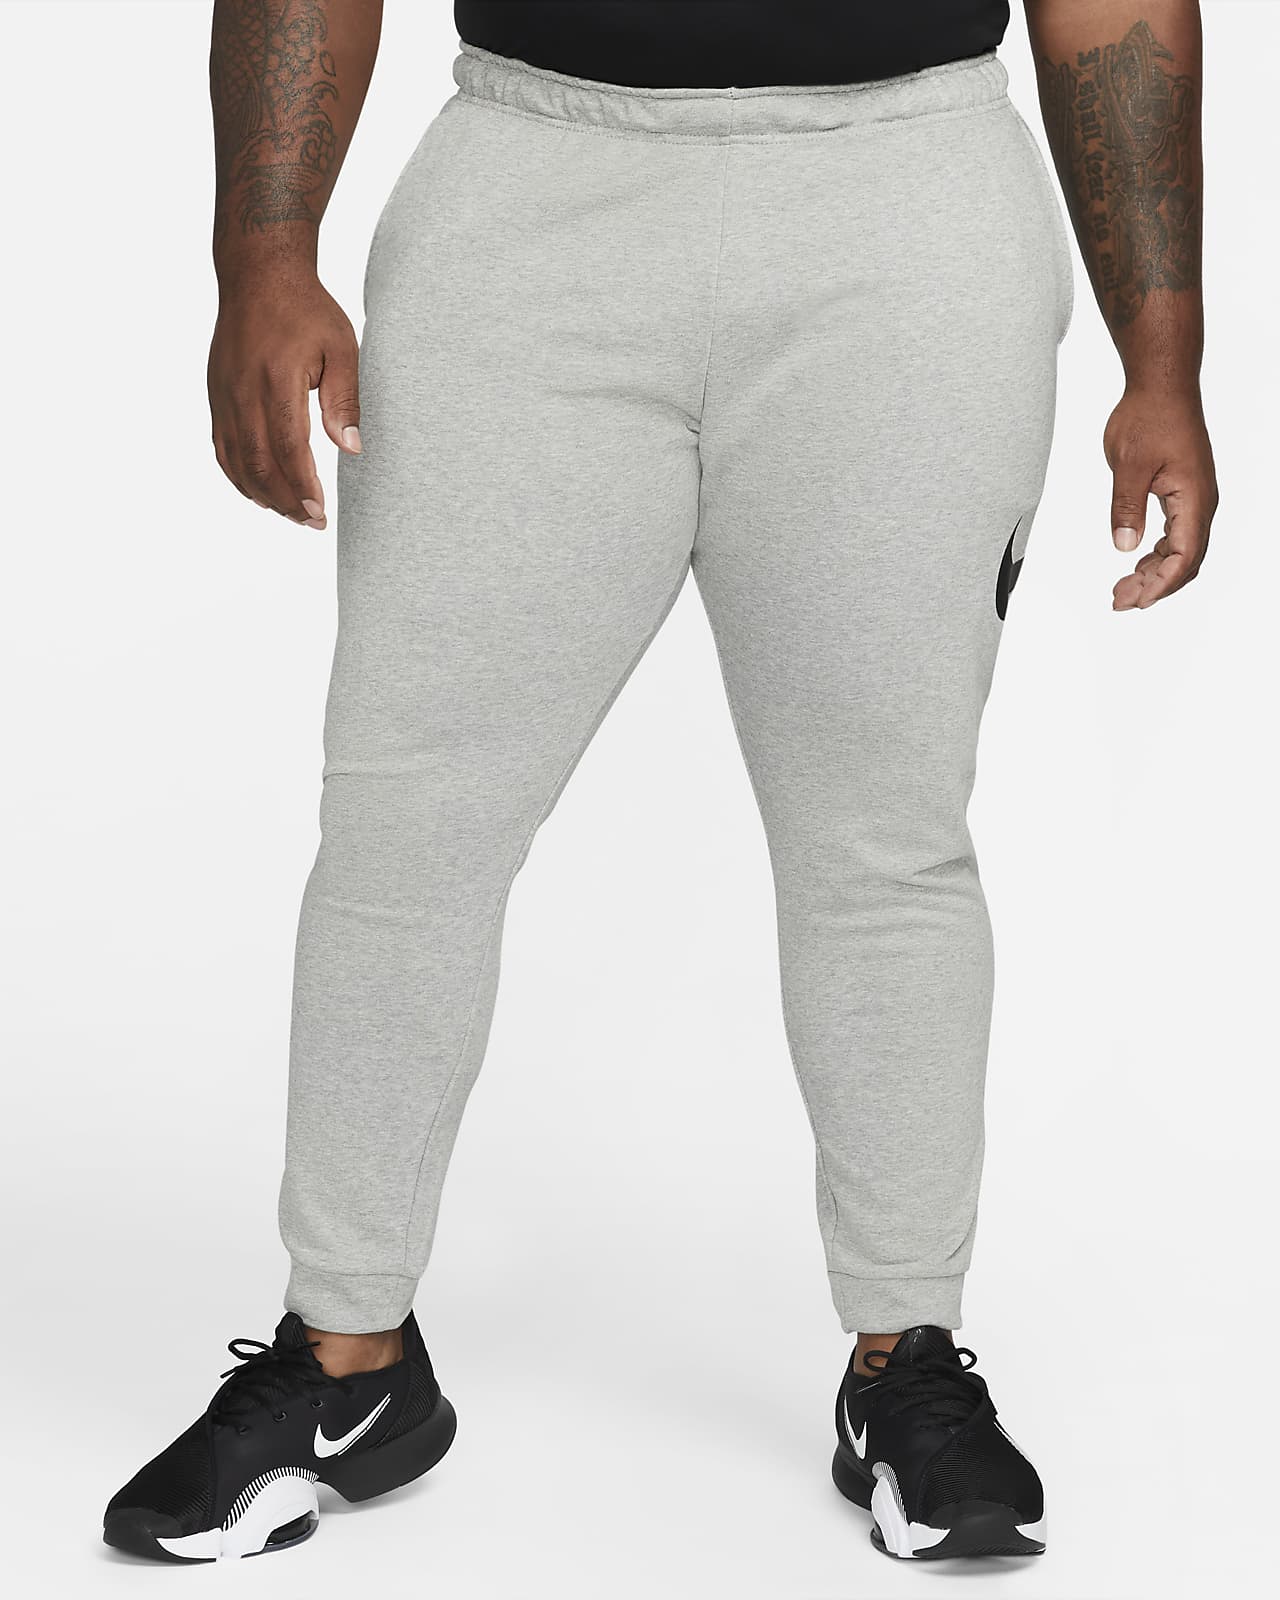 Nike Yoga Dri-FIT Men's Training Pants (Medium, Black/Heather) at